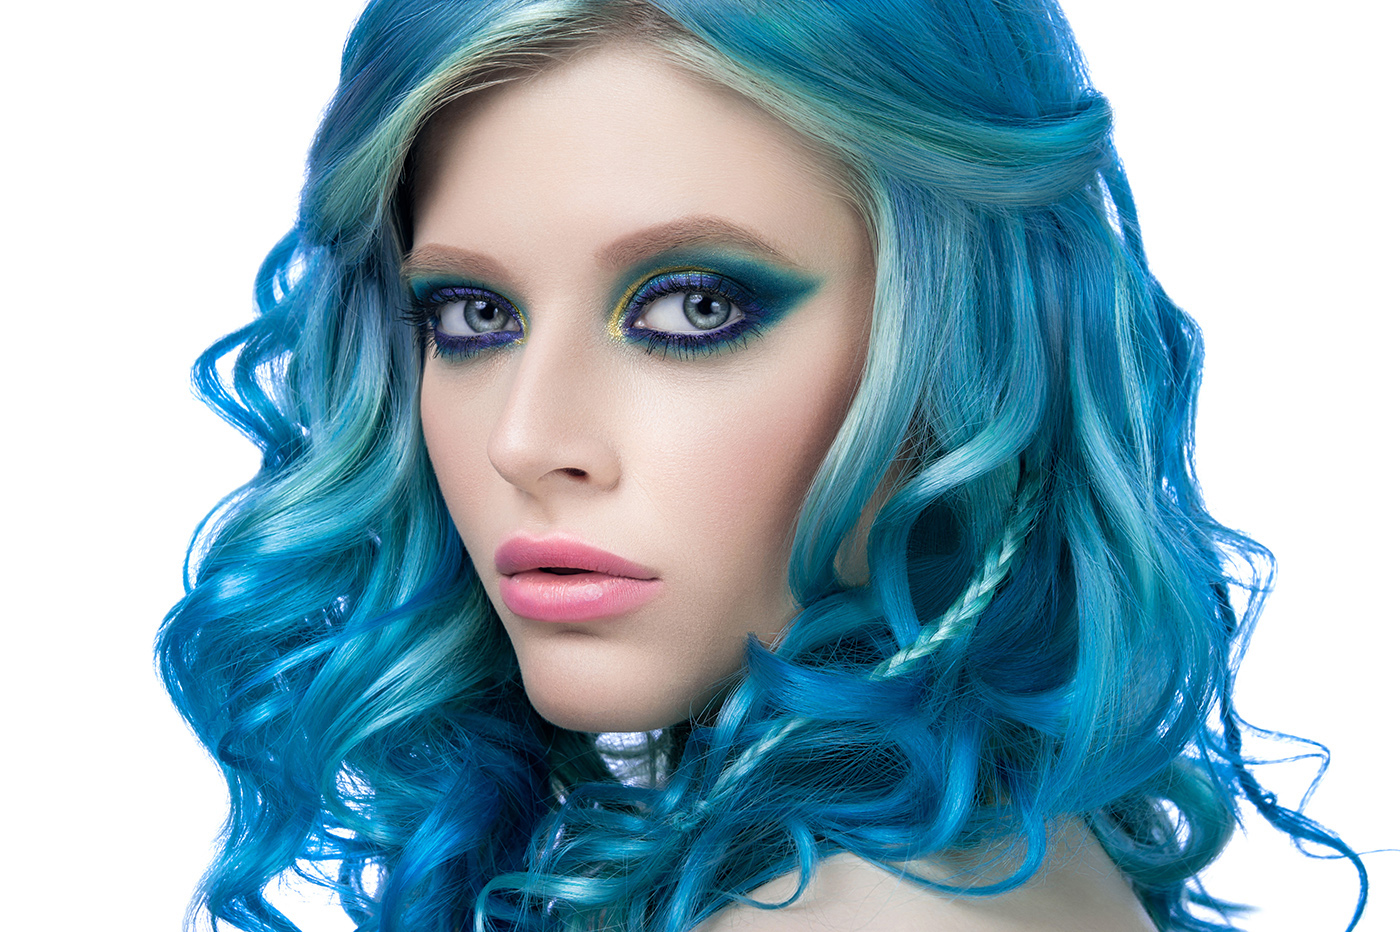 ad advertisement portrait hair Make Up retouch model face eyes lips cyan blue aquamarine kiev ukraine